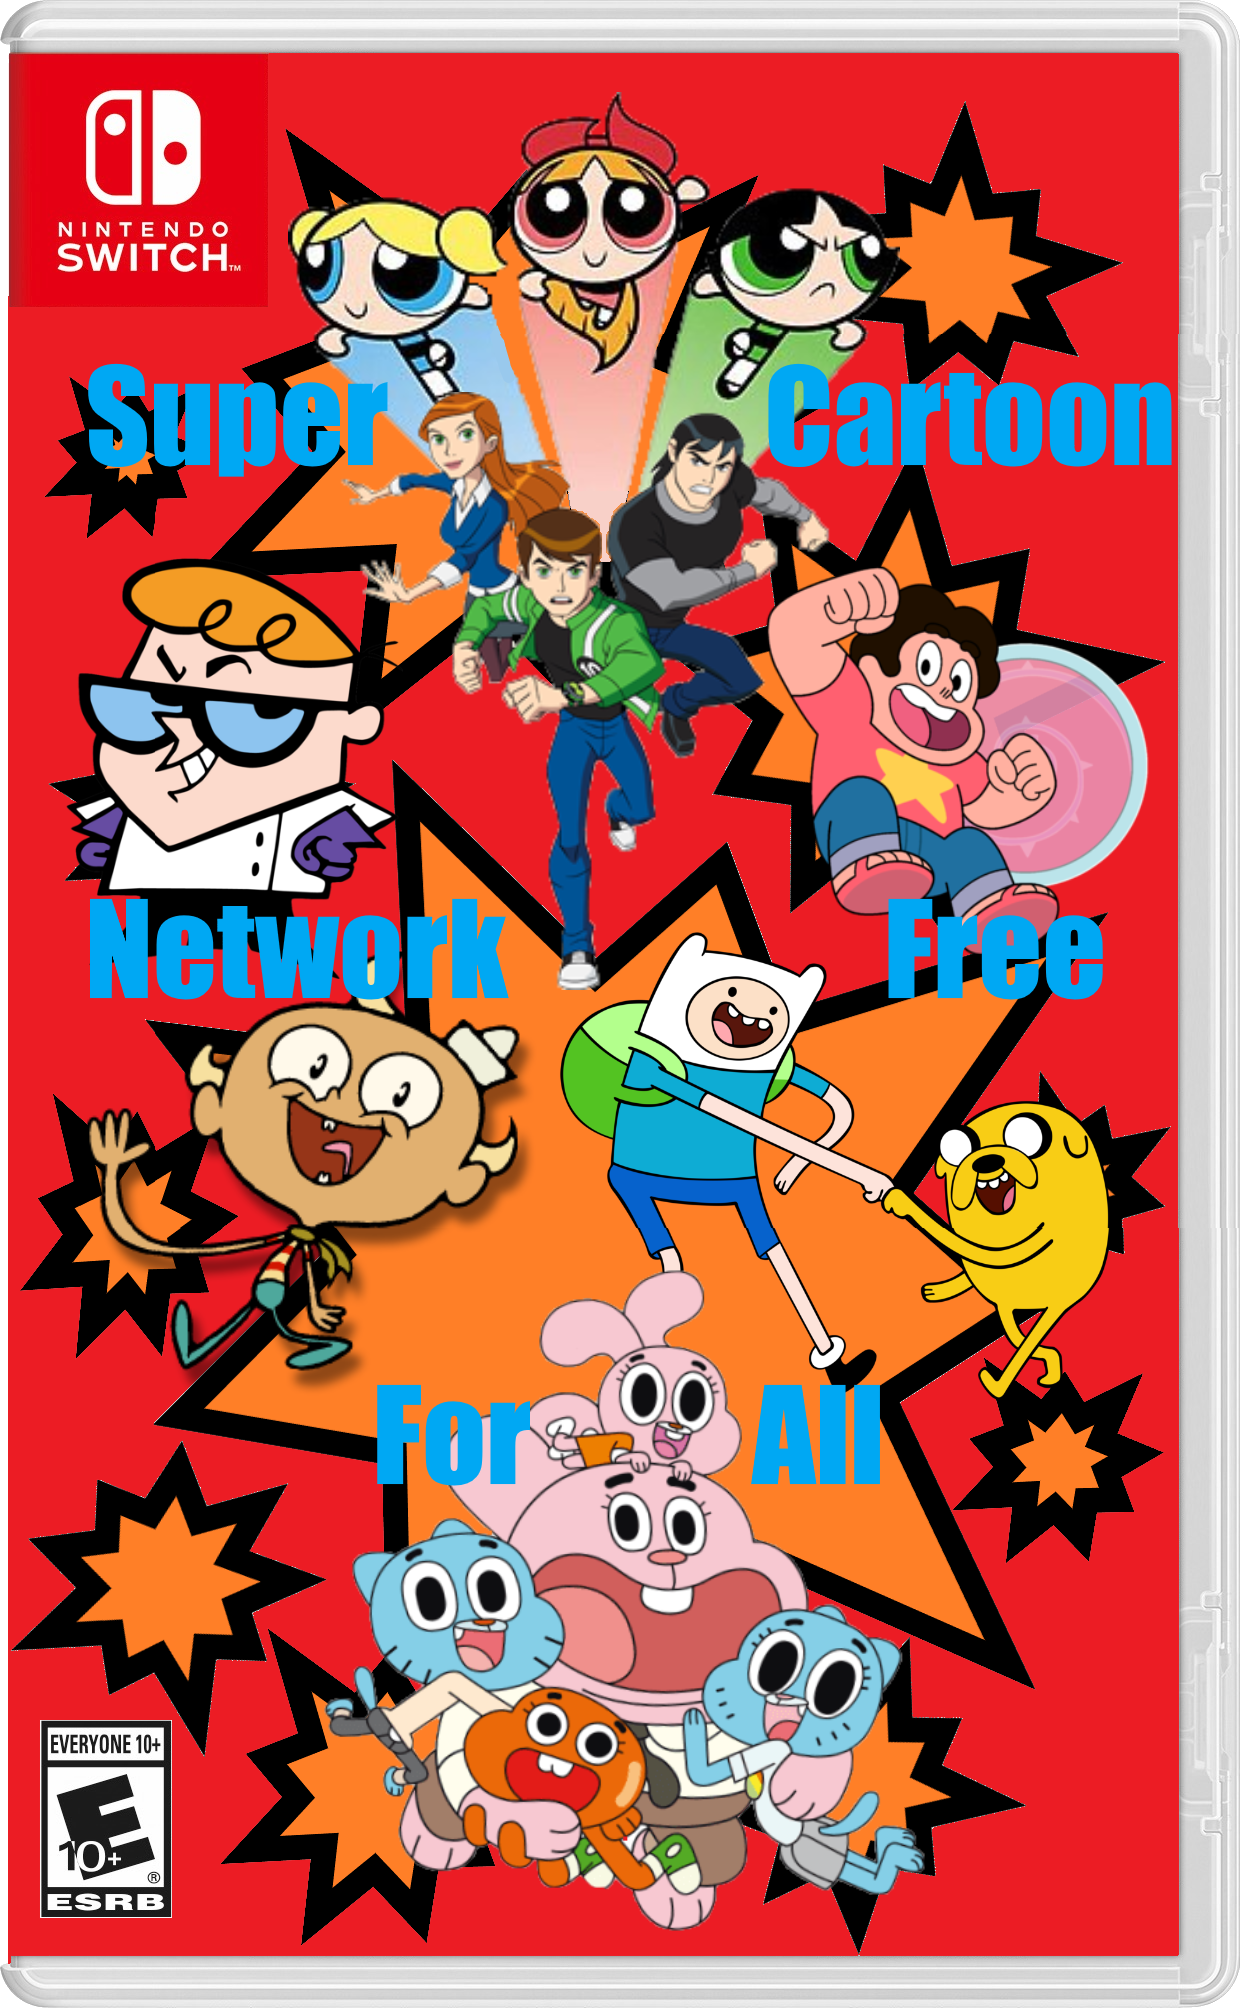 Cartoon Network Game On